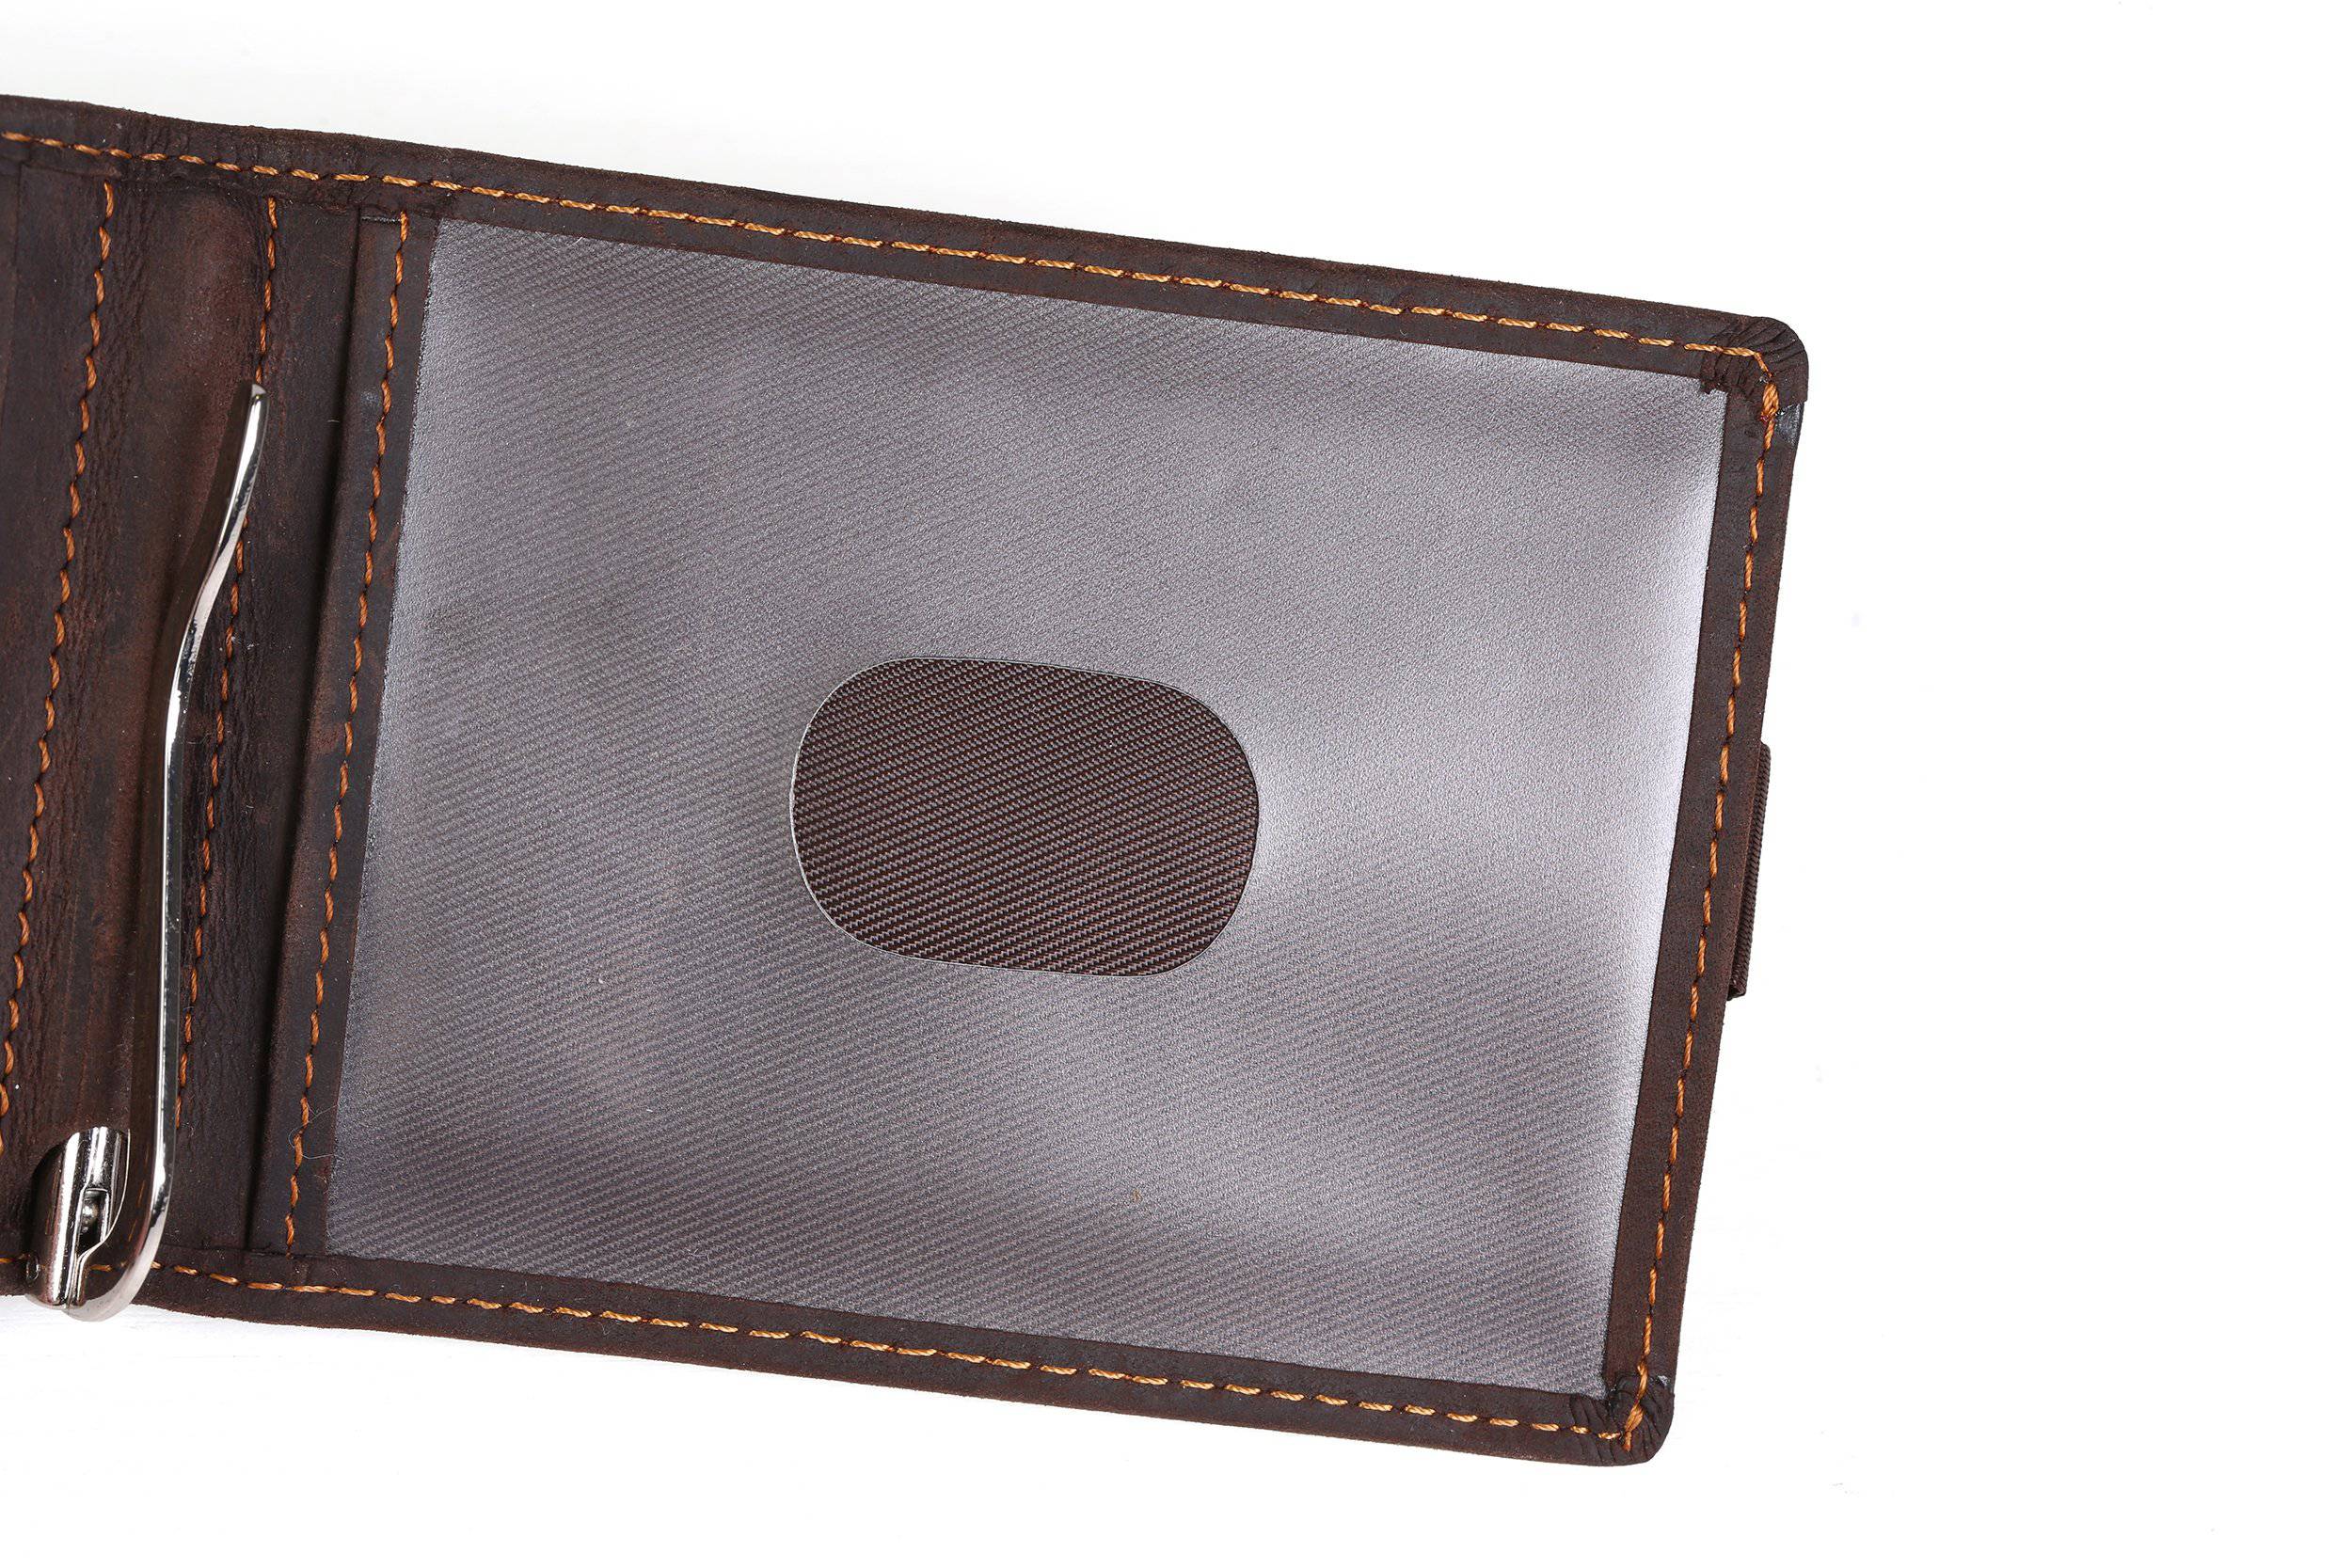 RFID-Blocking L-Fold Money-Clip Brown Leather Wallet - Tie, bowtie, pocket square  | Kissties